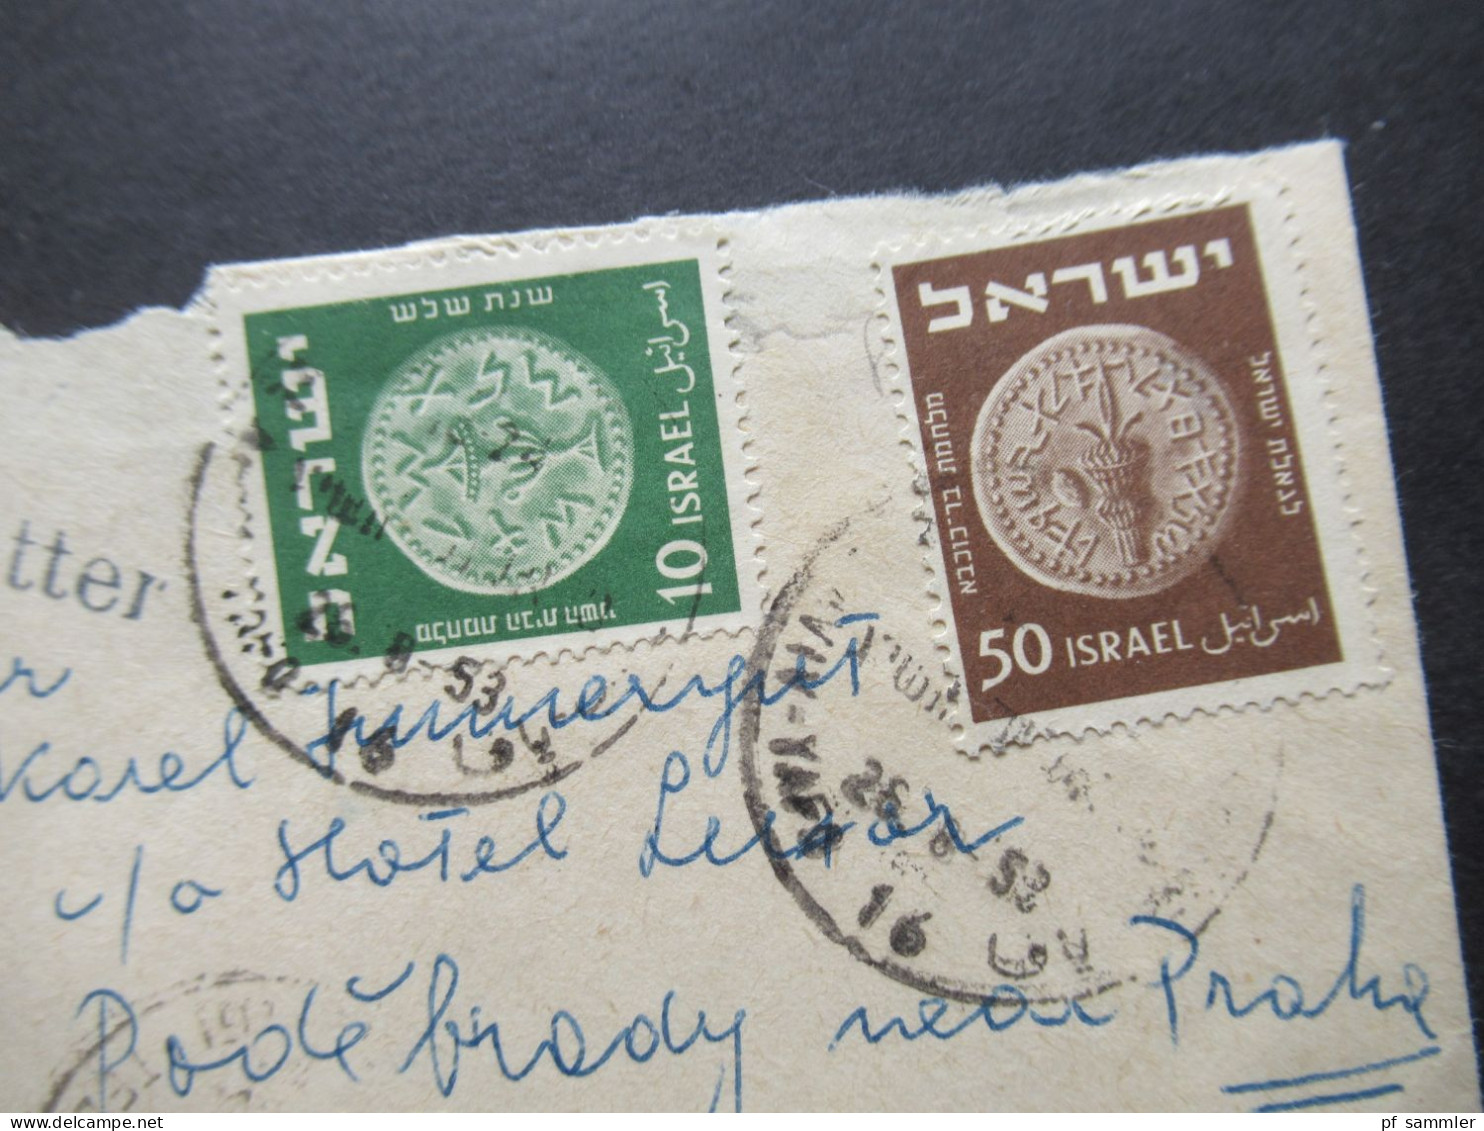 Israel 1953 By Air Mail / Luftpost In Die CSR Stempel L1 Printed Matter / Kleiner Umschlag - Covers & Documents